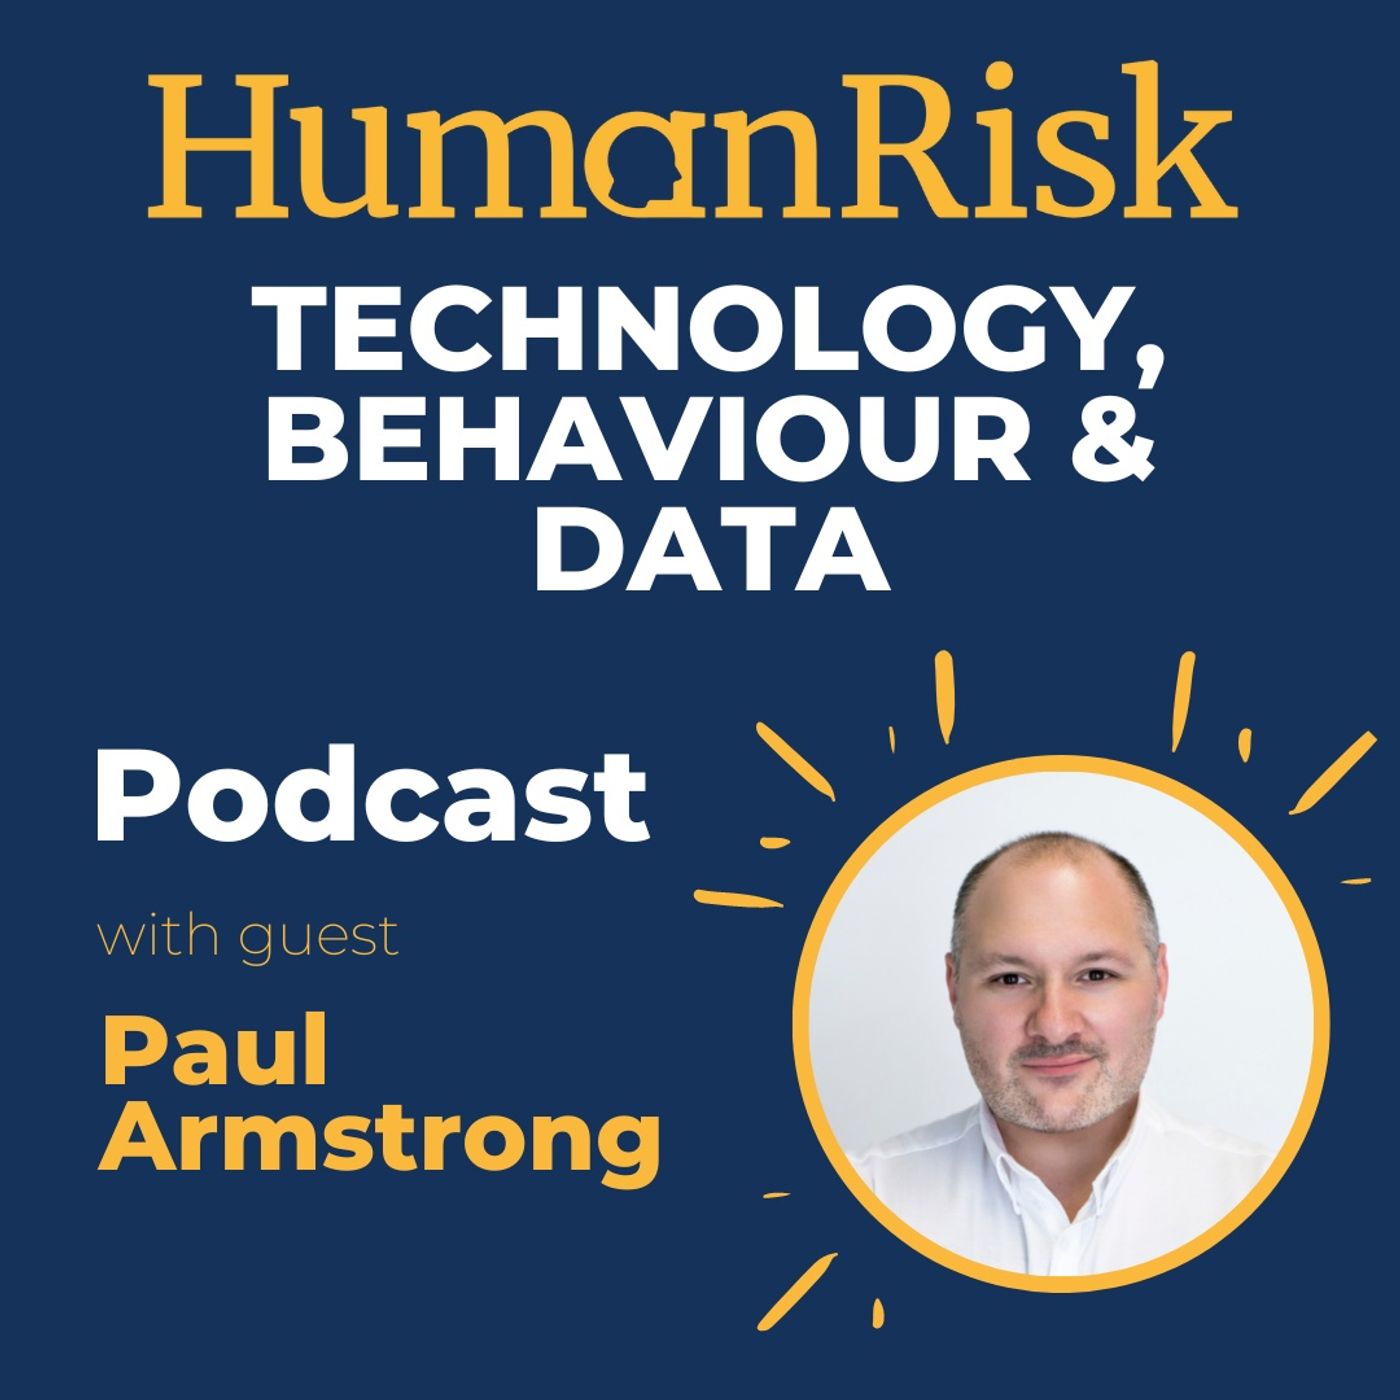 Paul Armstrong on Technology, Behaviour & Data Image